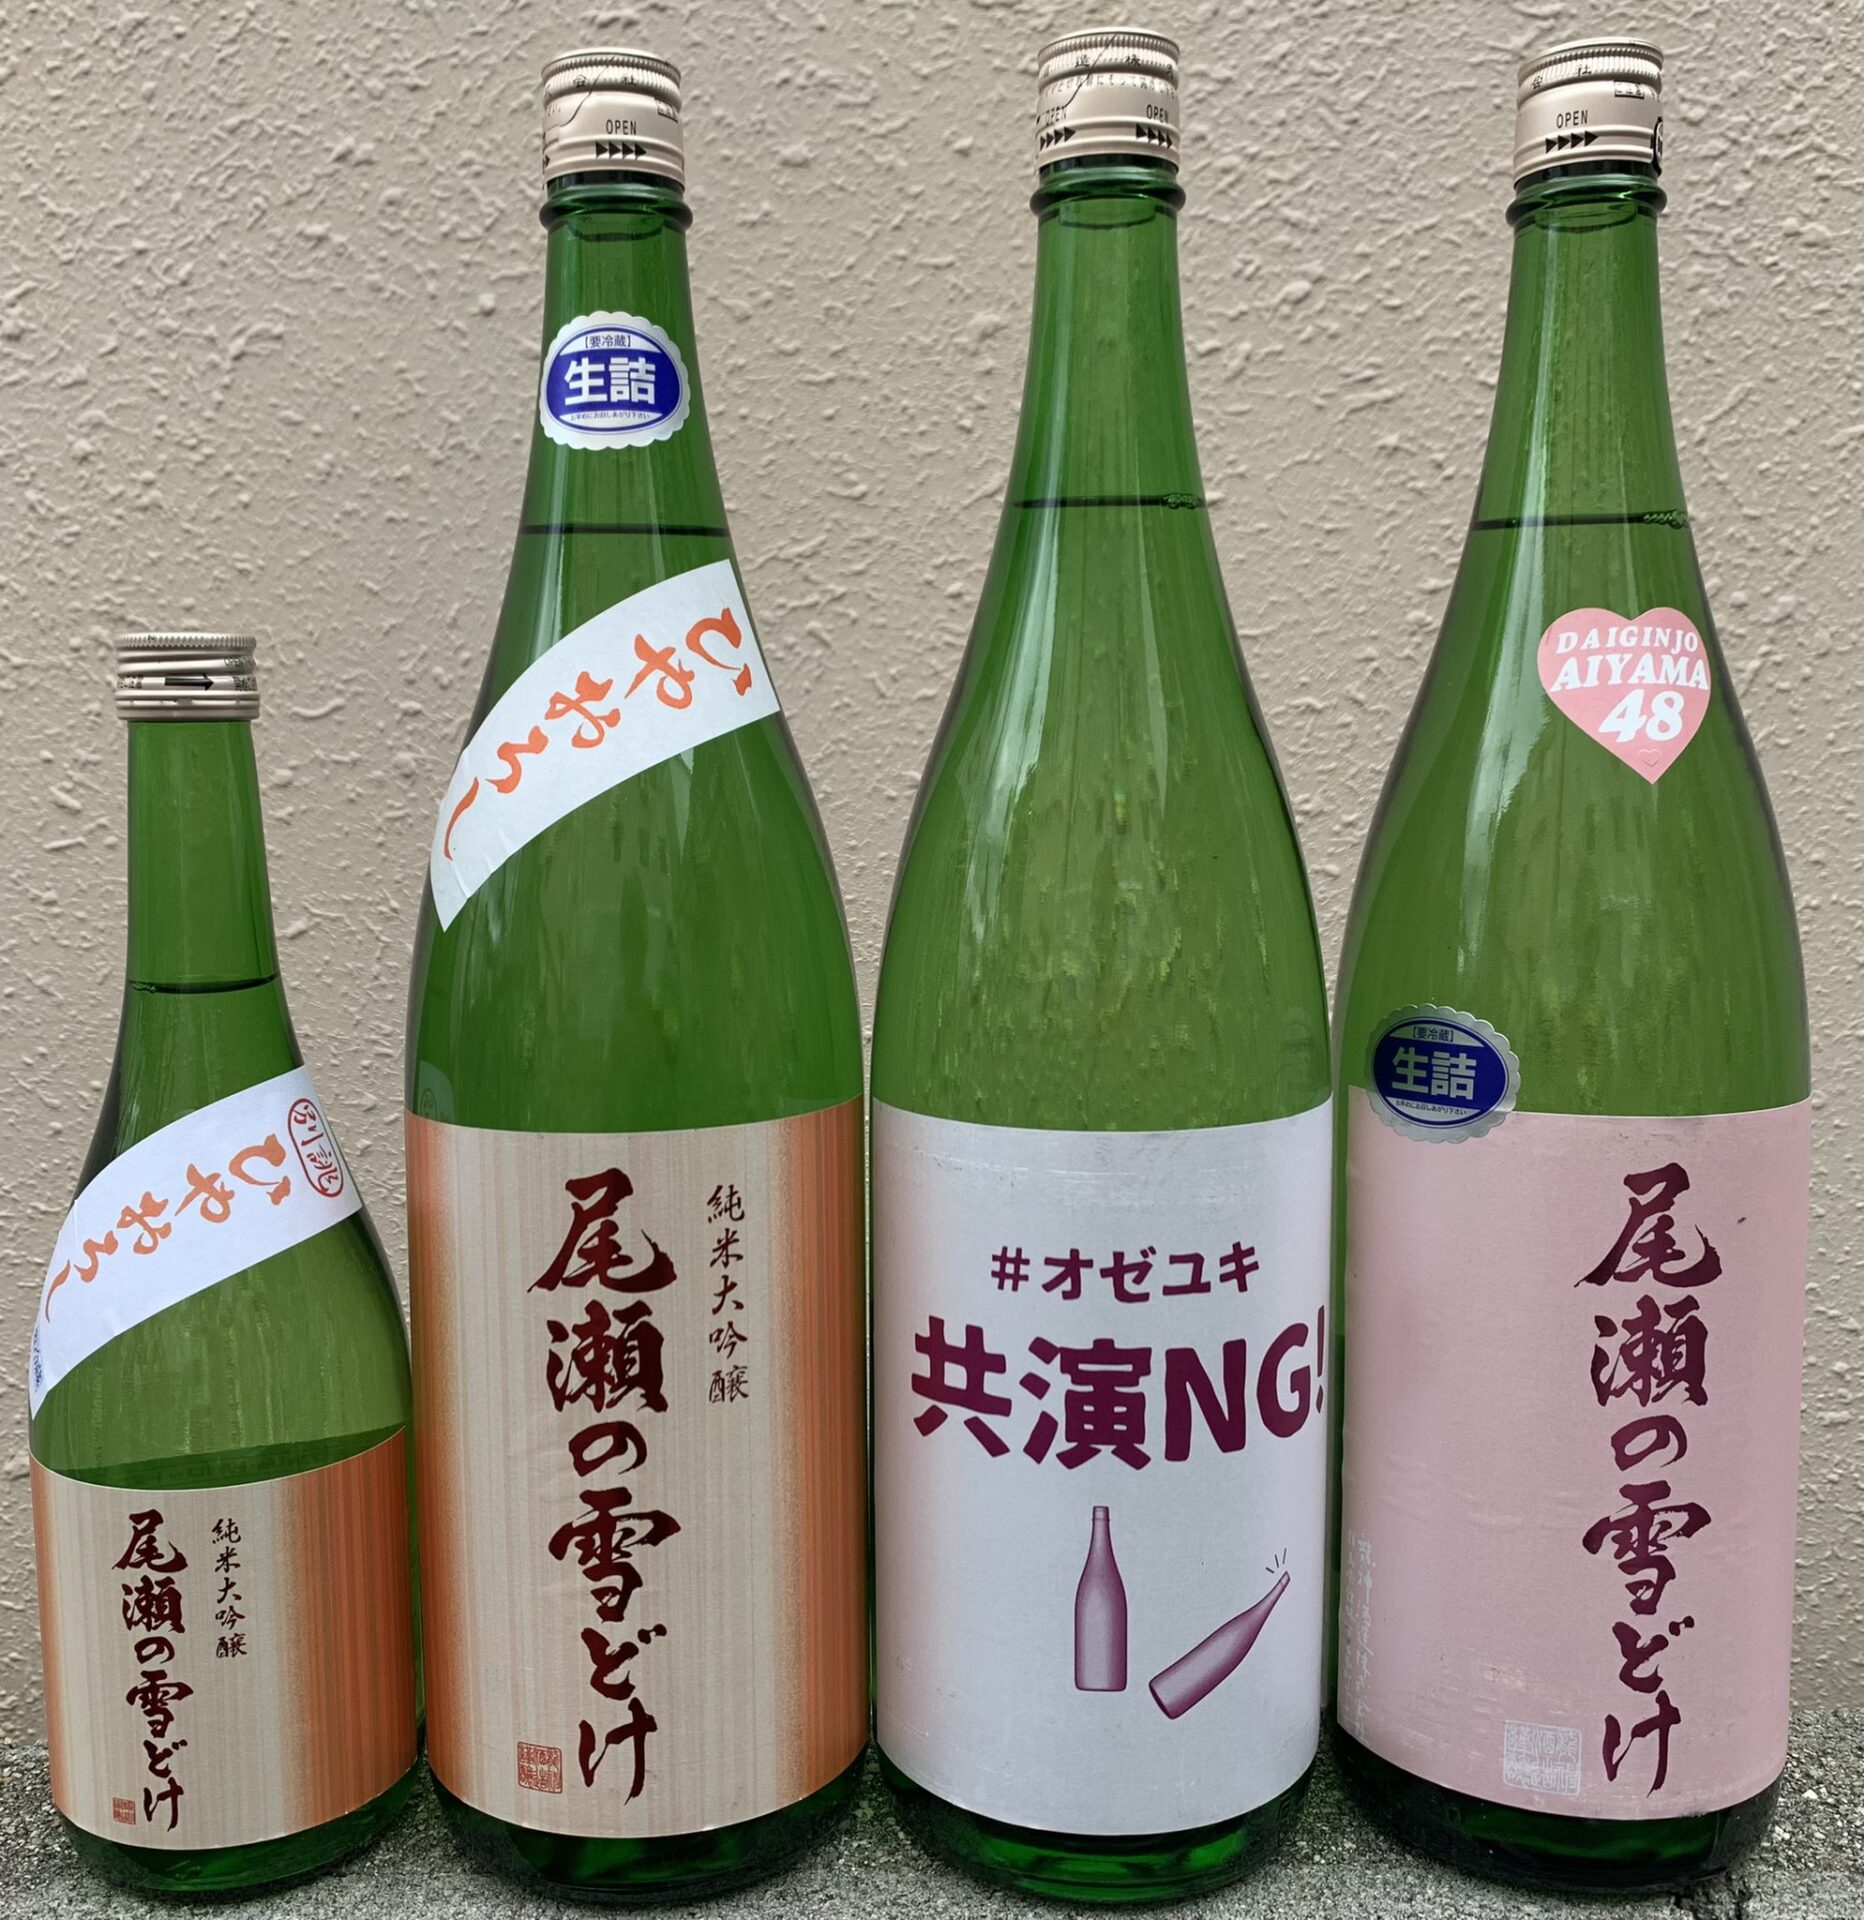 What kind of sake brand is 尾瀬の雪どけ Oze no Yukidoke?